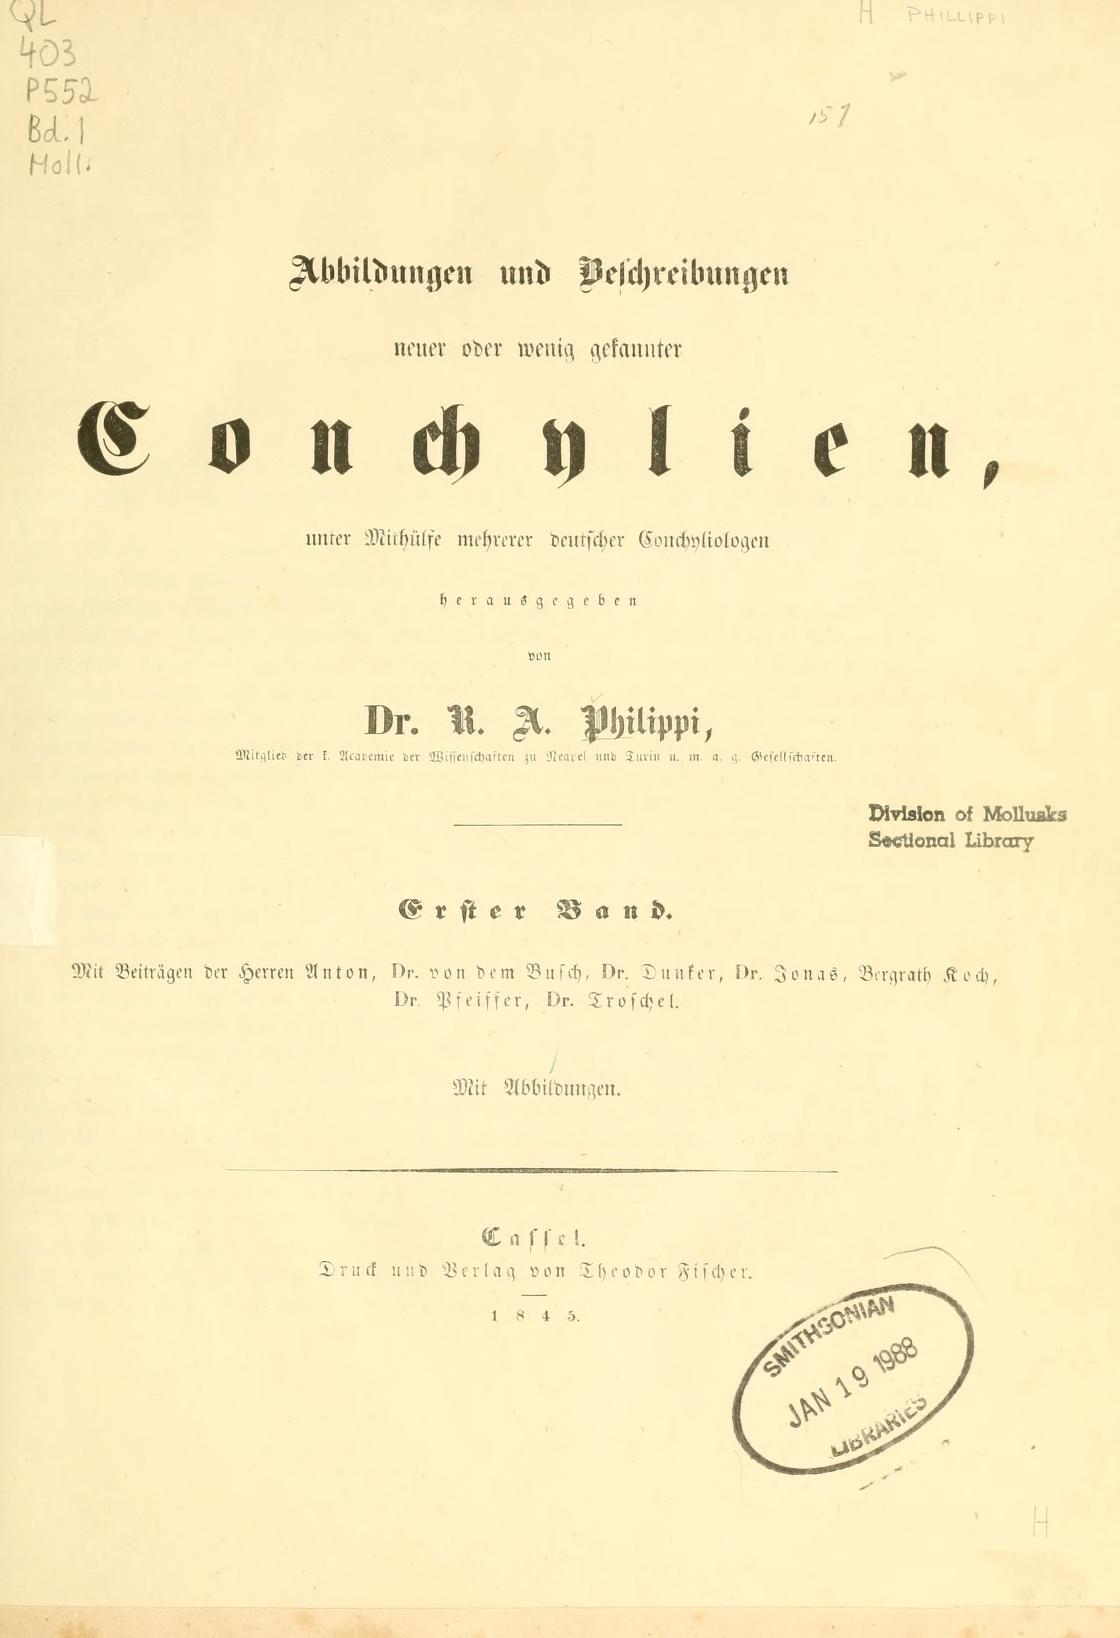 Media type: text, Philippi 1842. Description: Abbildungen, Section 1: Melania